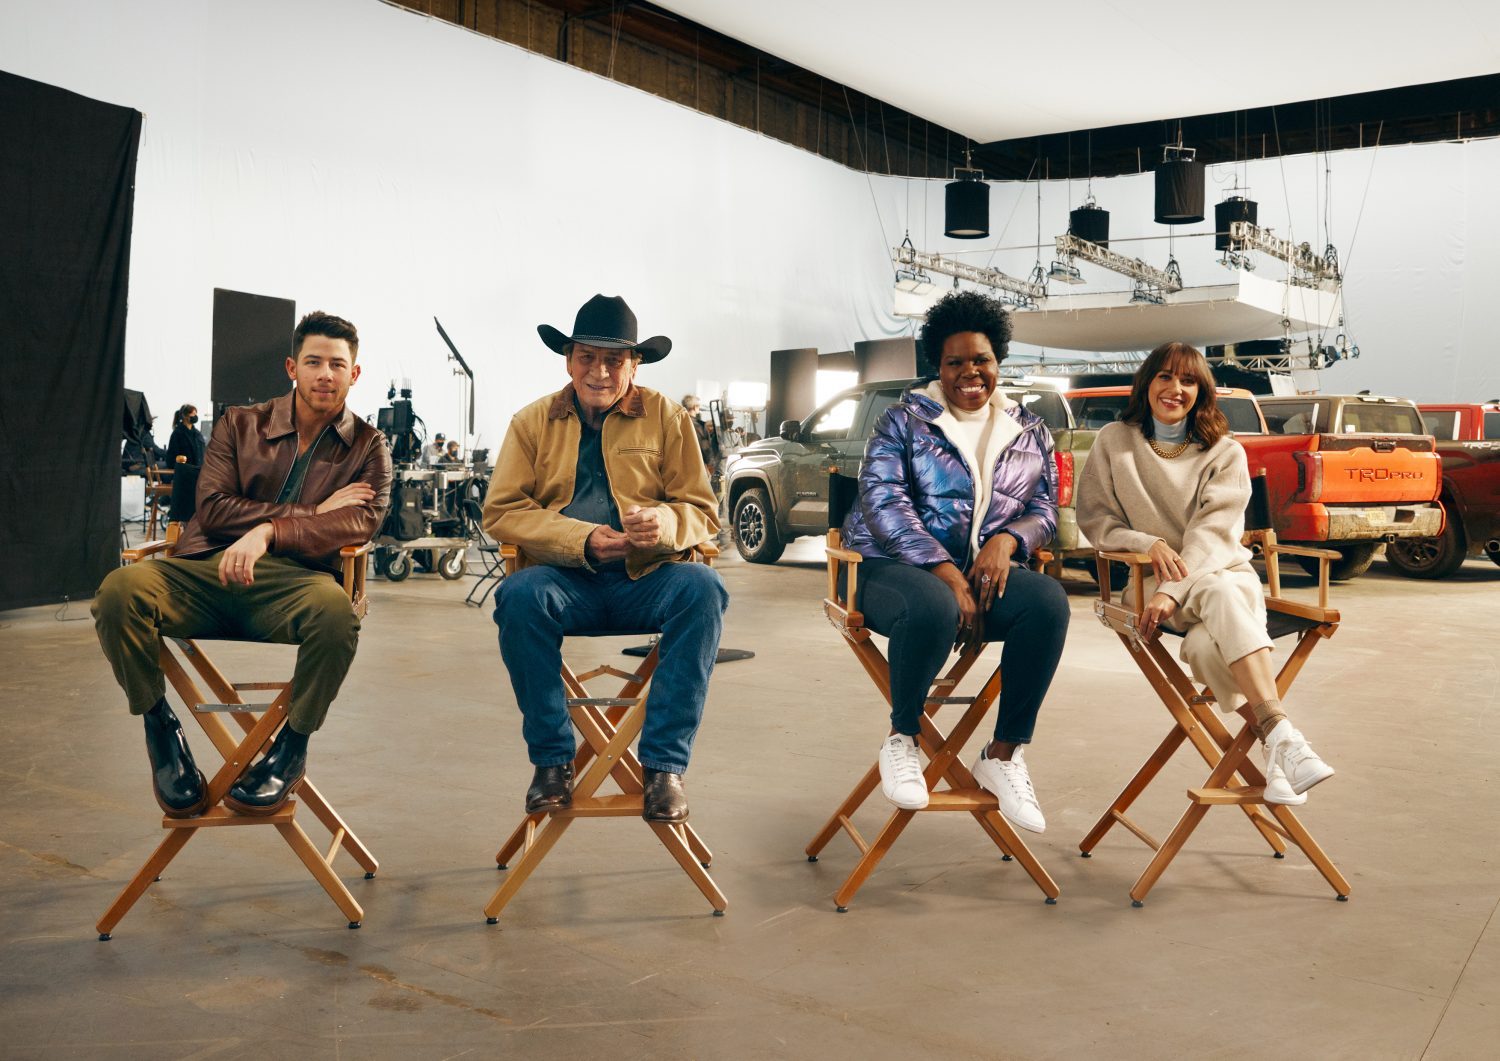 Nick Jonas, Tommy Lee Jones, Leslie Jones, and Rashida Jones on the set of "The Joneses" Super Bowl TV commercial